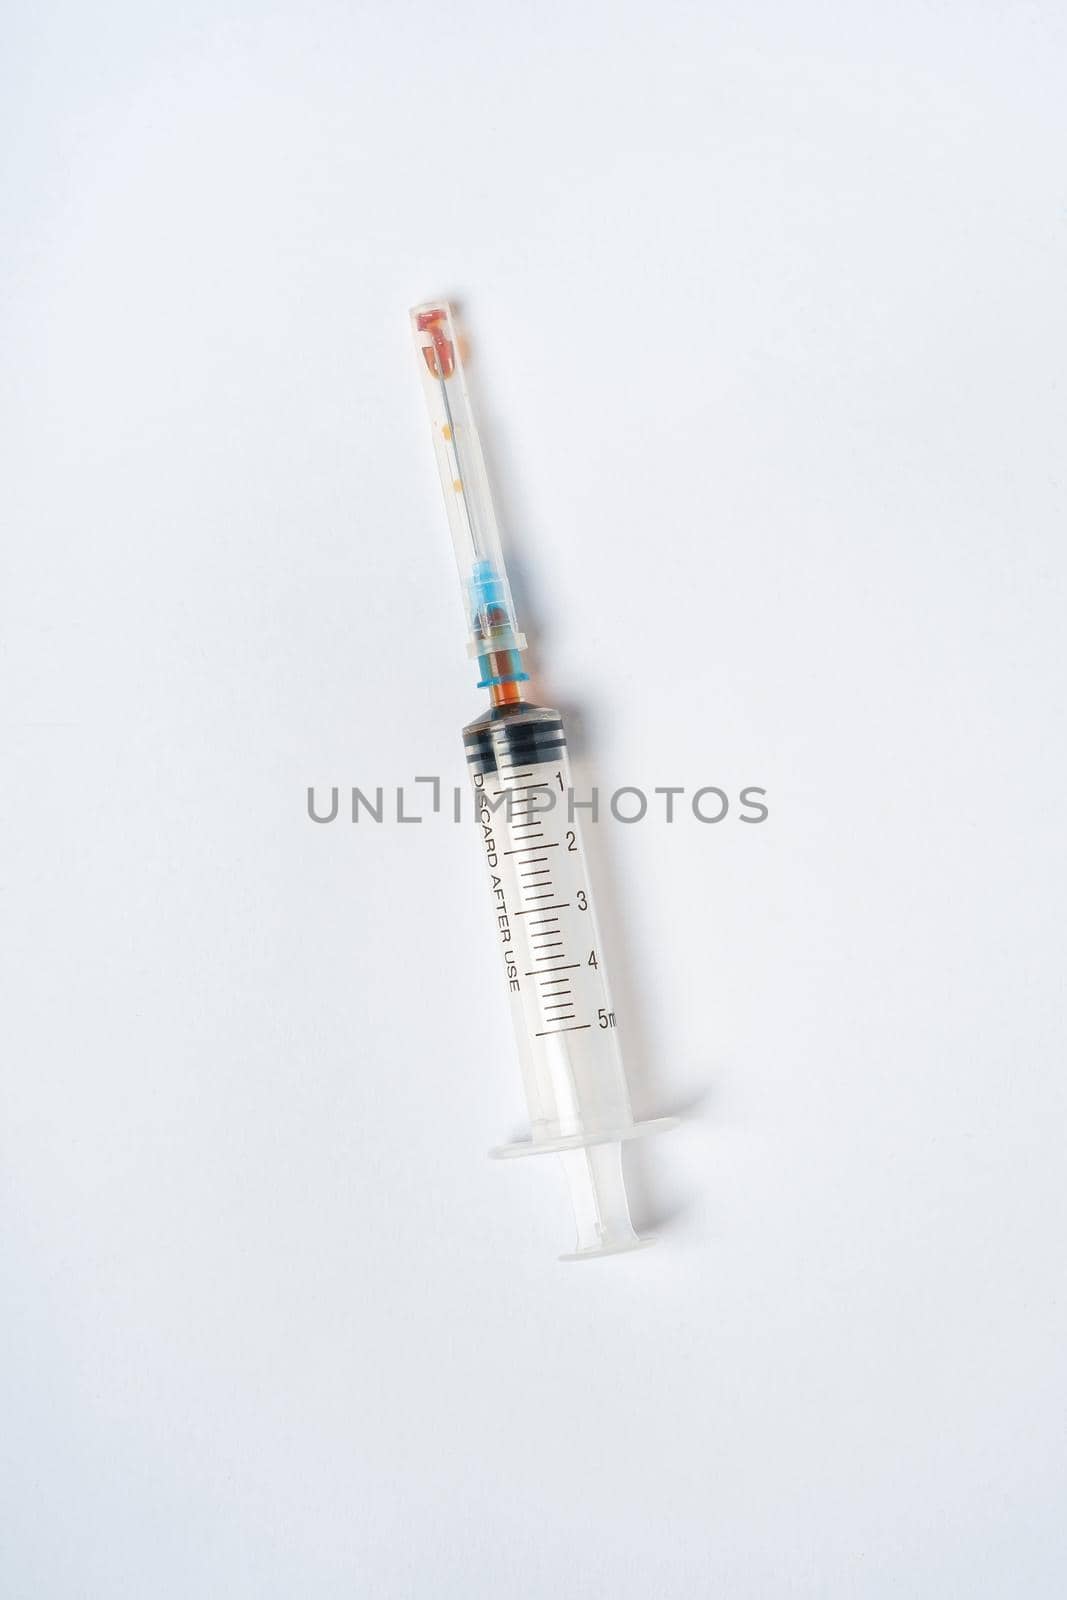 Dirty used plastic syringe, isolated